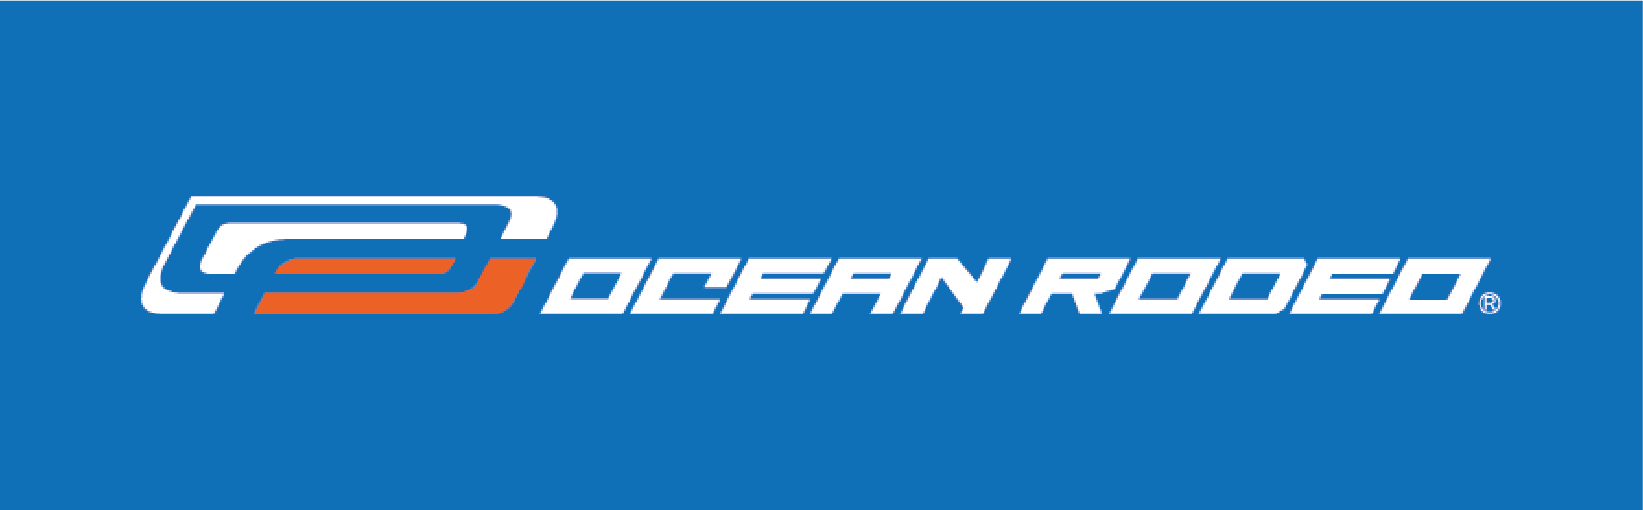 ocean rodeo logo